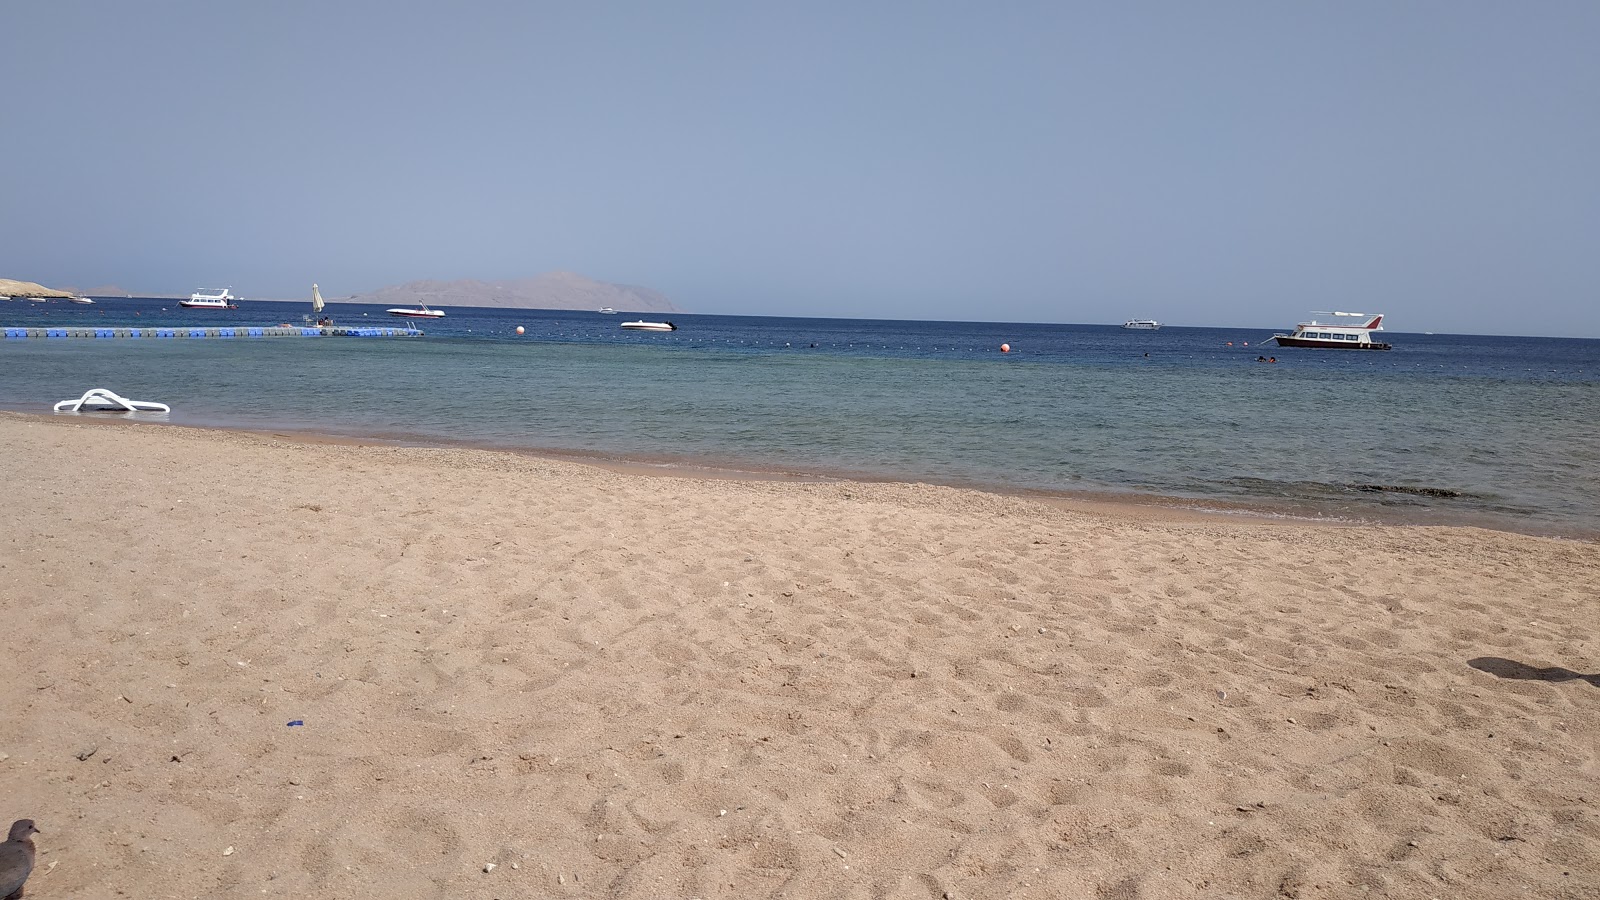 Foto de Shark Bay beach - lugar popular entre os apreciadores de relaxamento